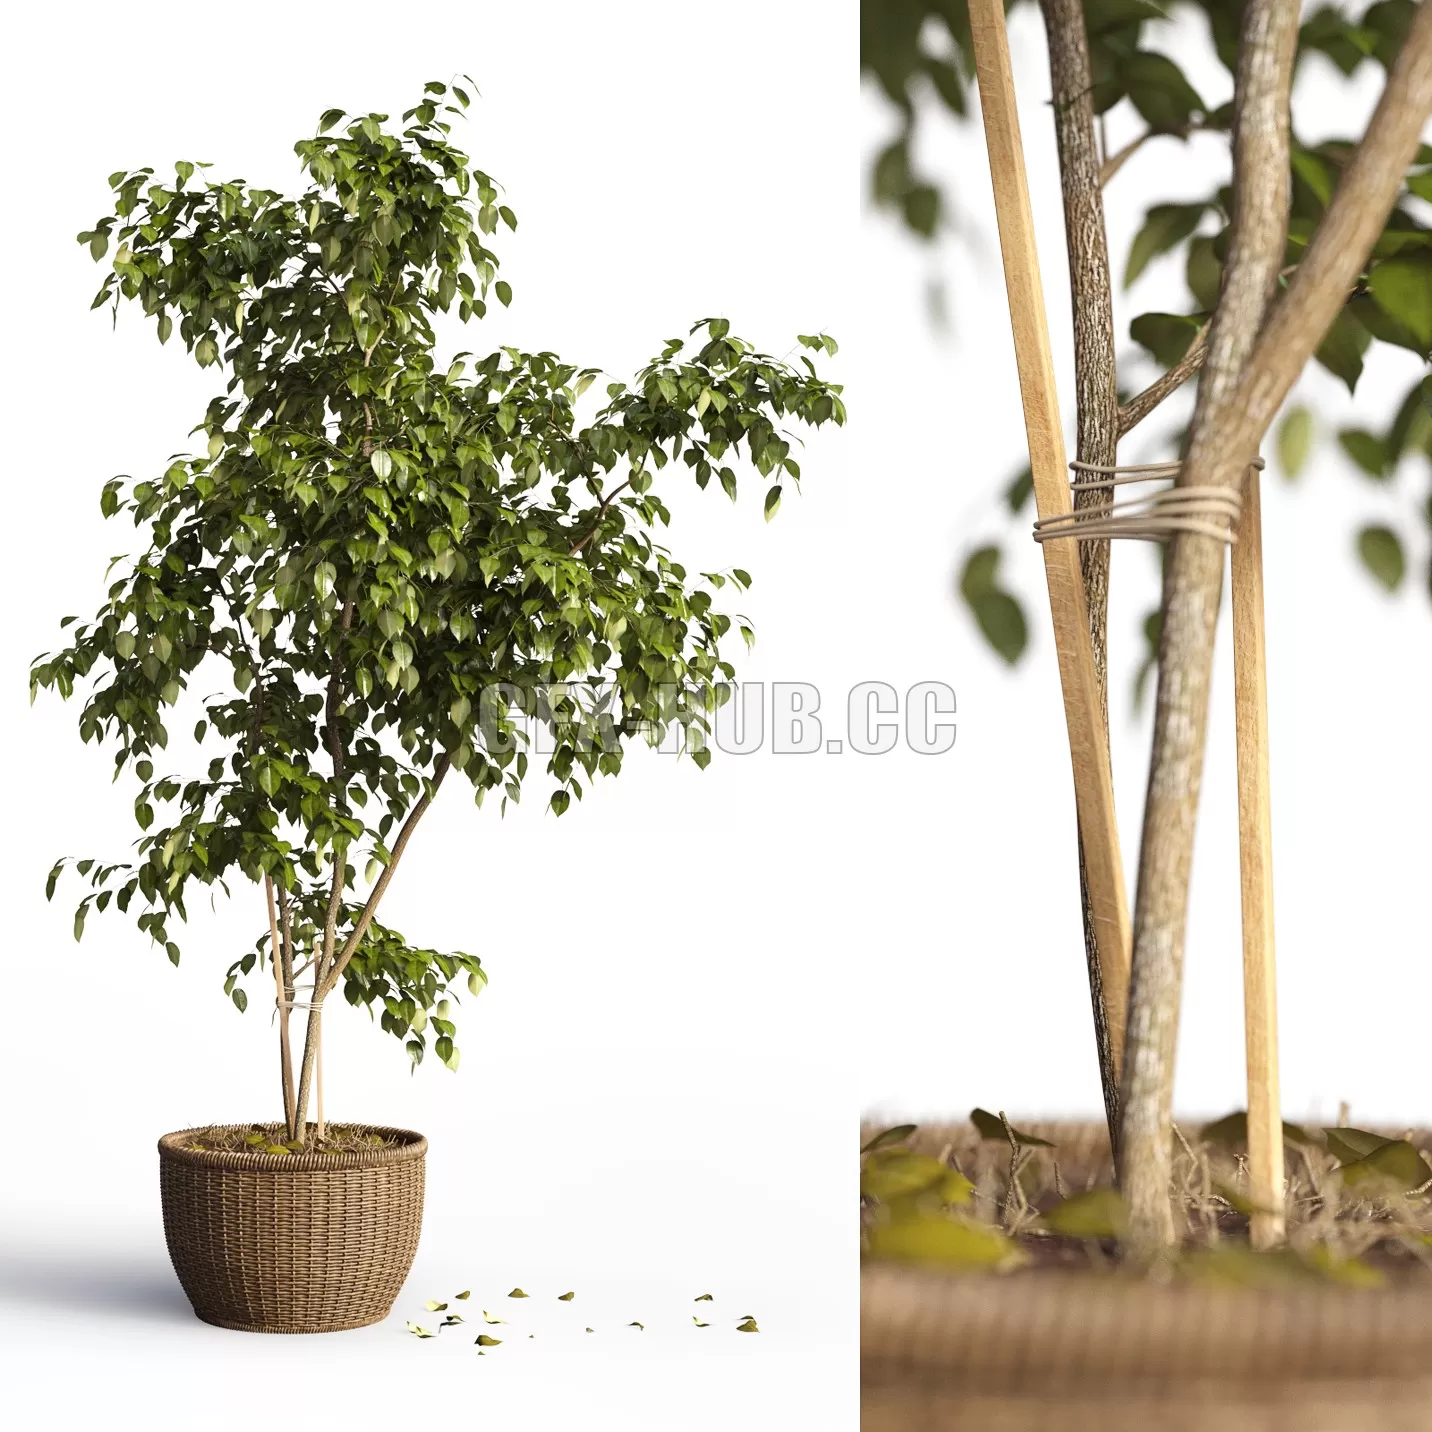 PLANT – Benjamin plant in a pot